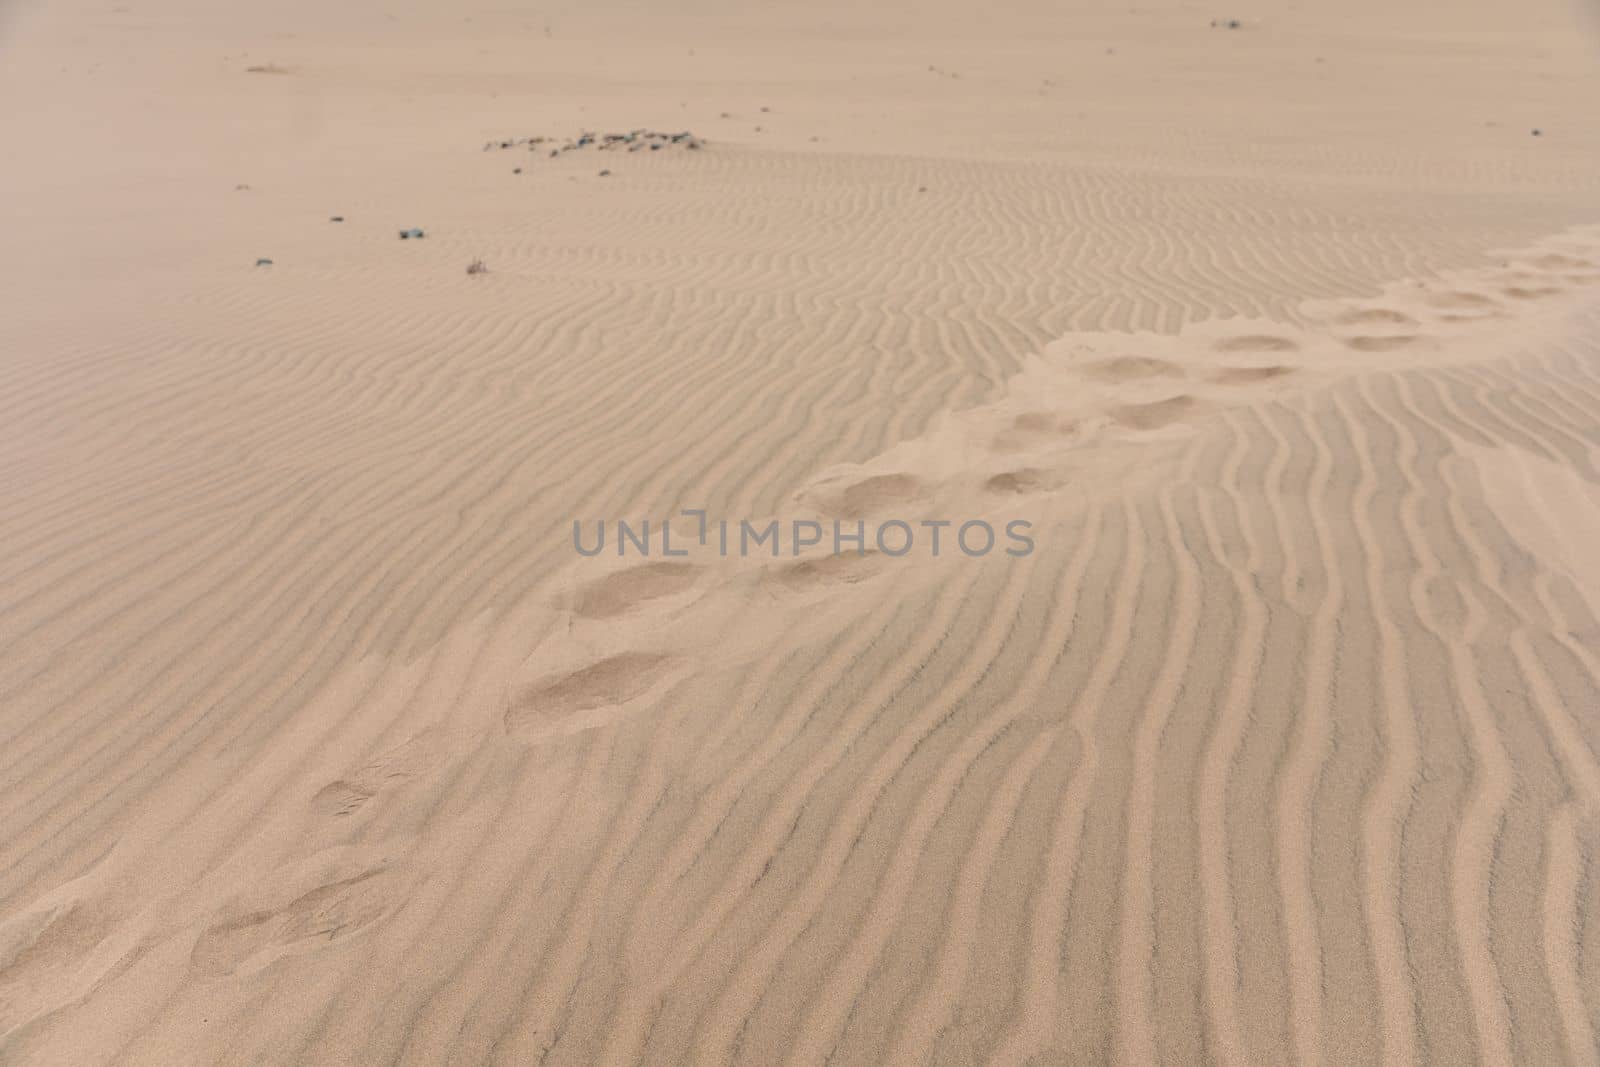 shoe prints on sand dune by Edophoto